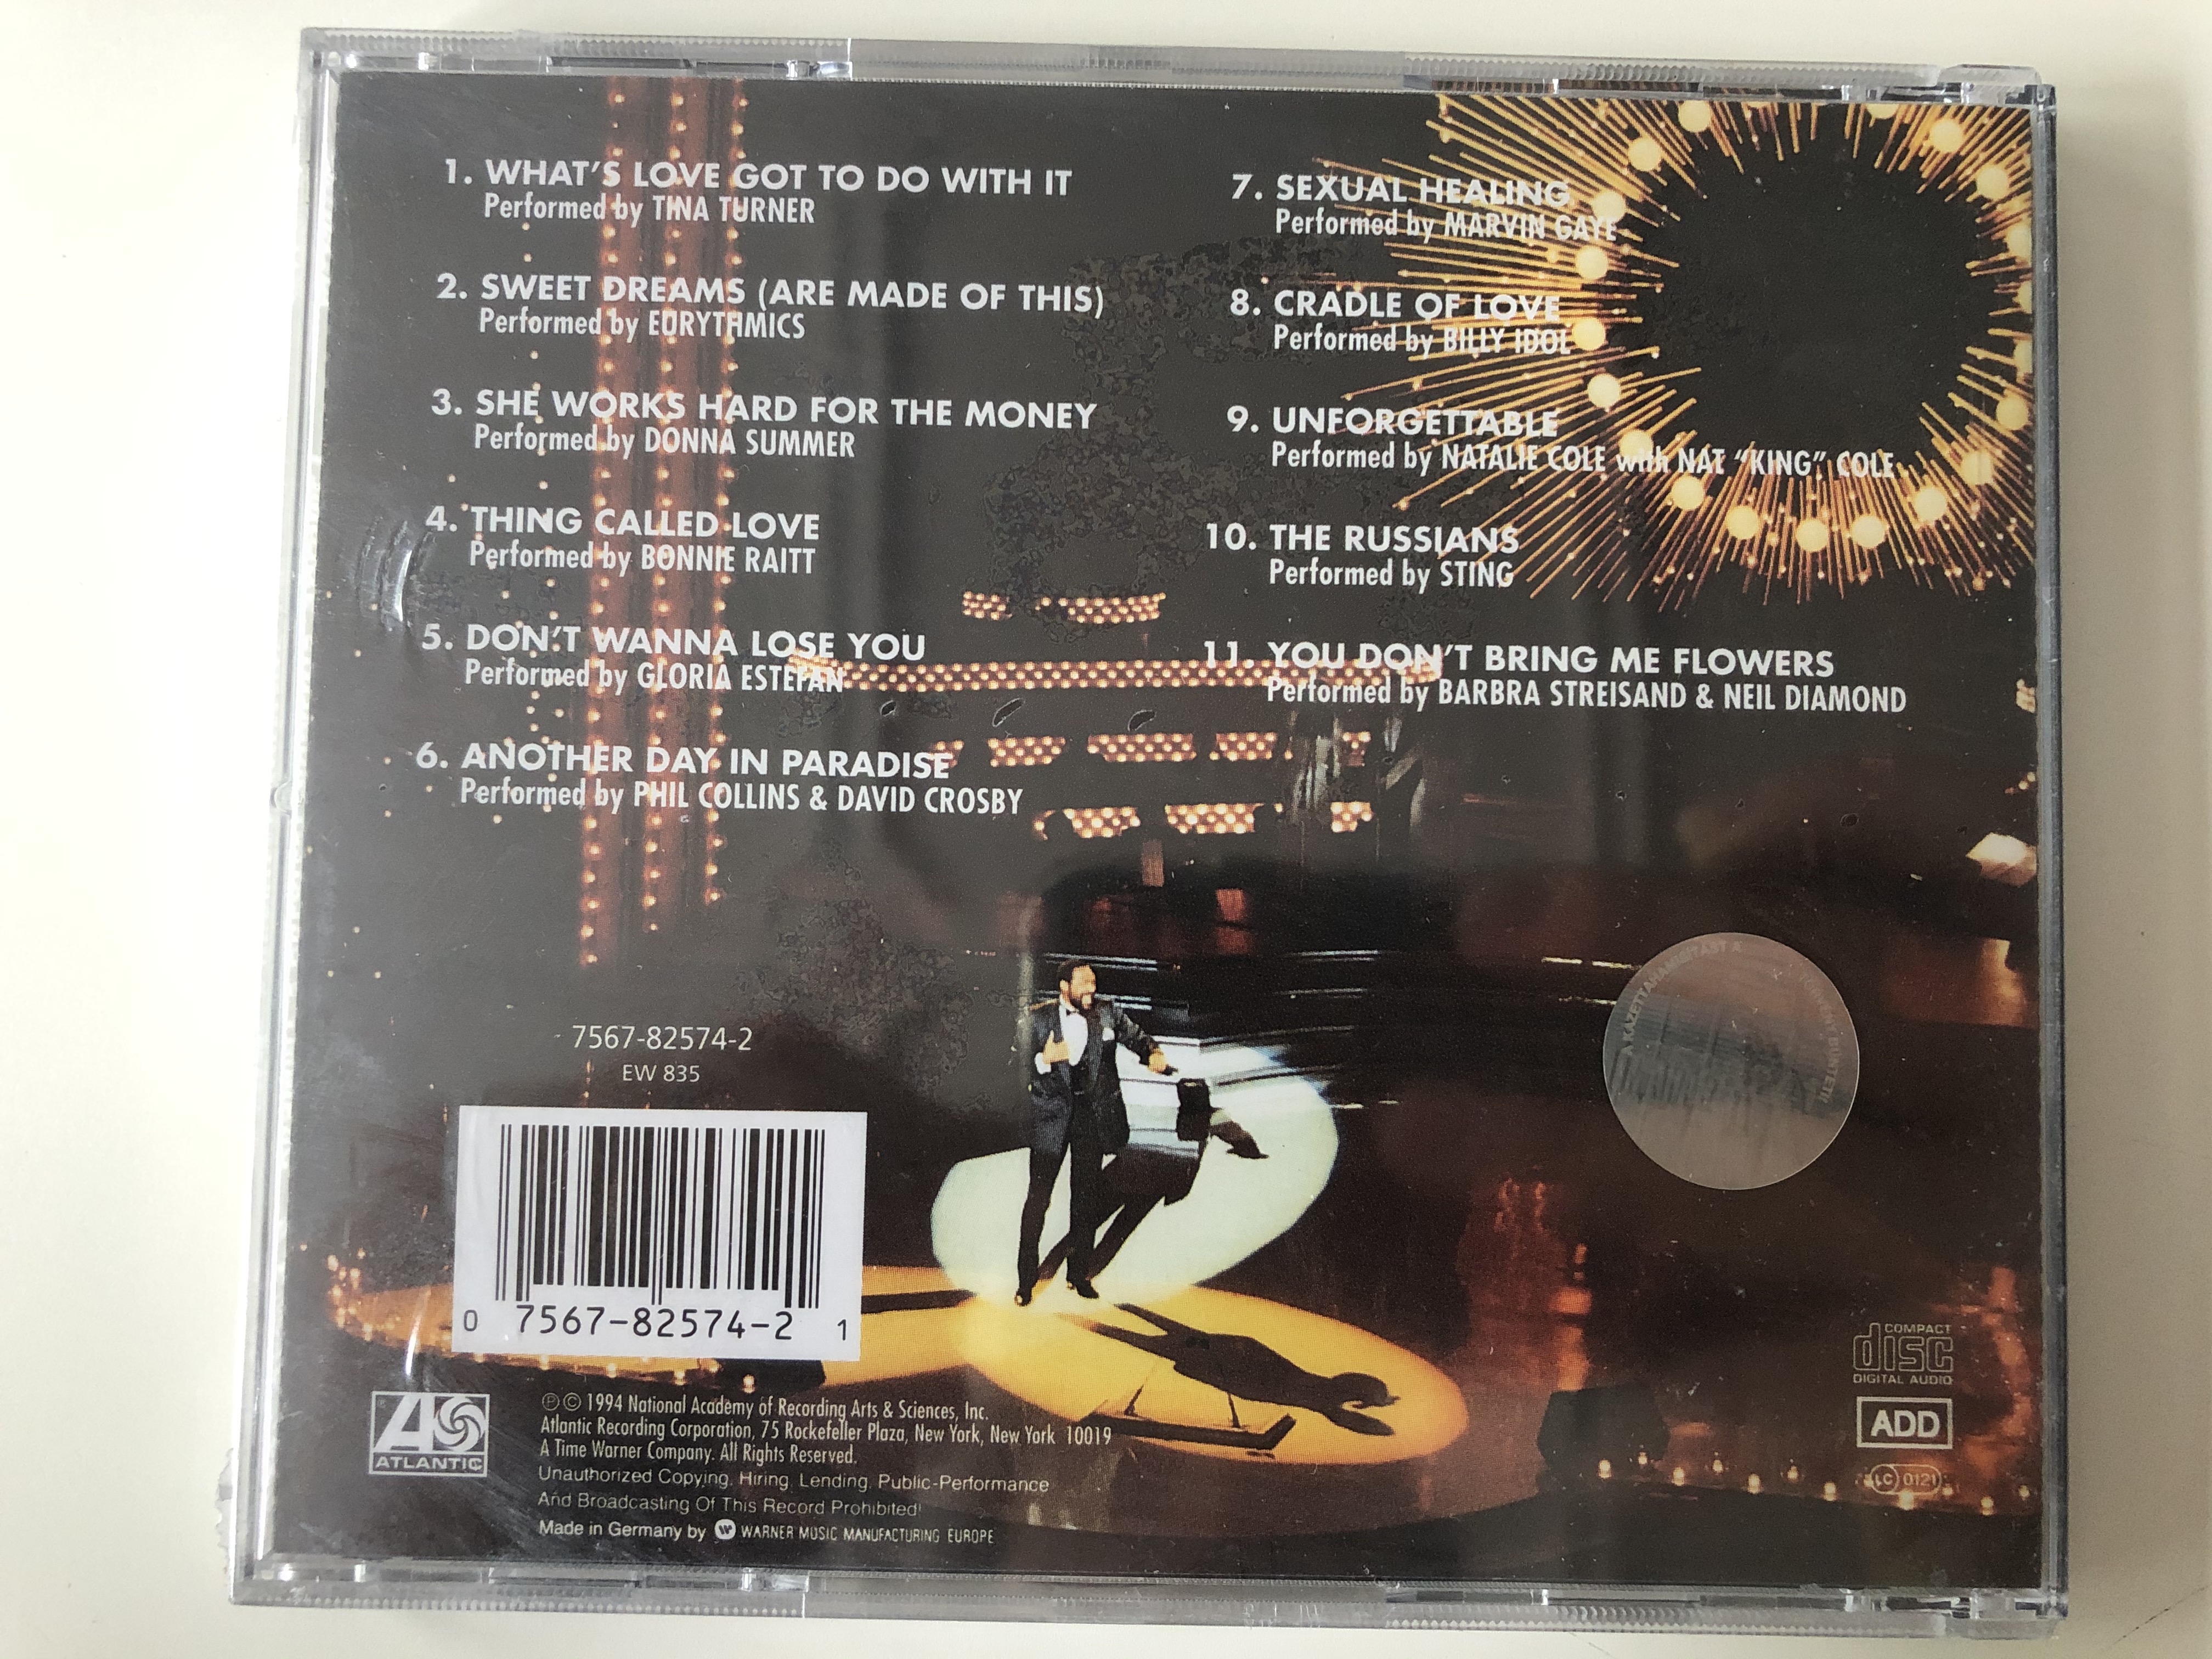 grammy-s-greatest-moments-volume-i-atlantic-audio-cd-1994-7567-82574-2-2-.jpg